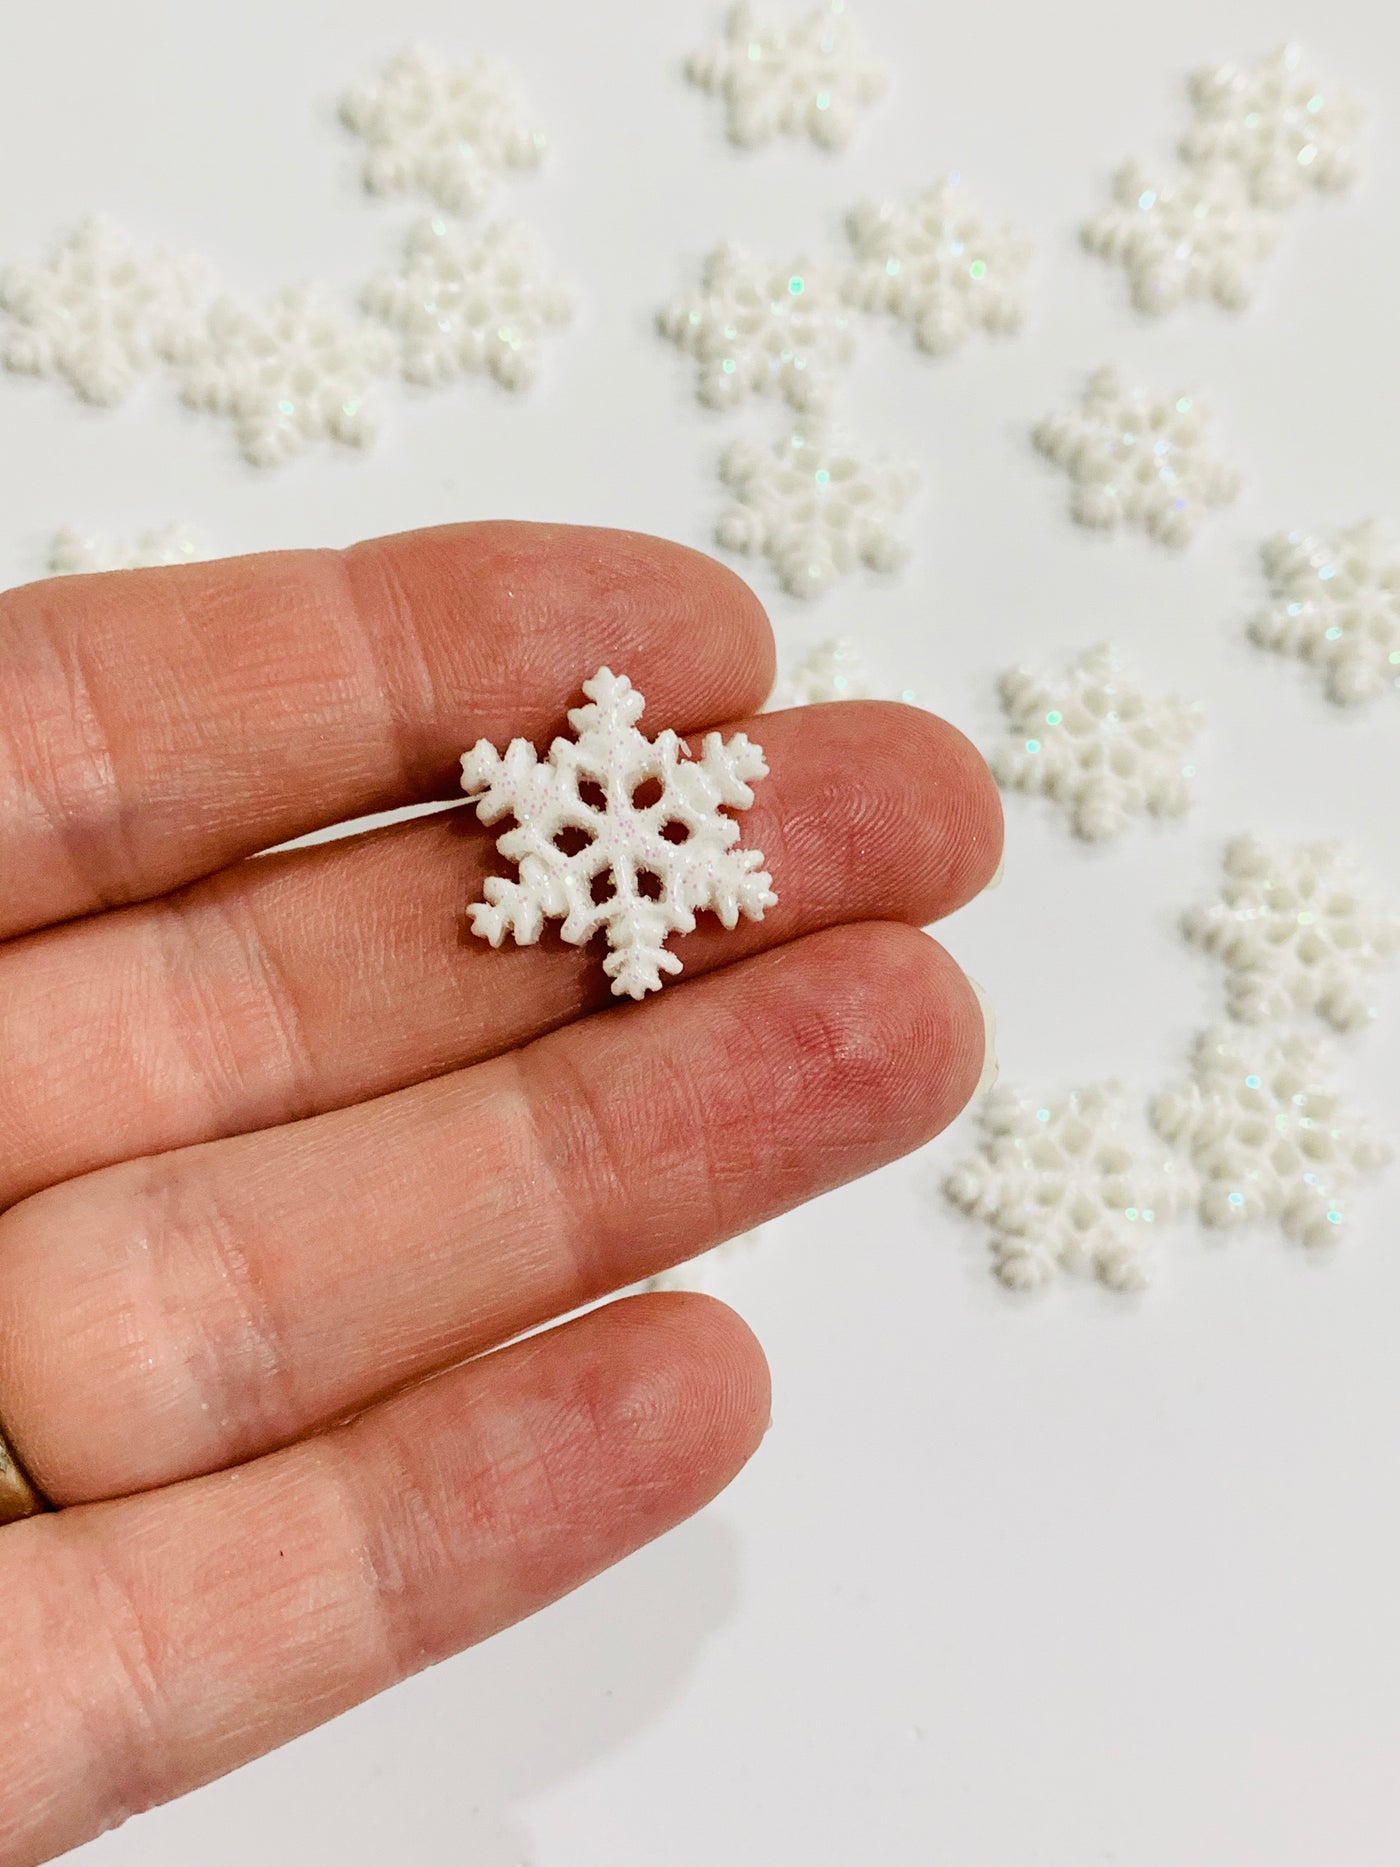 10pcs White Snowflake Glitter Resins